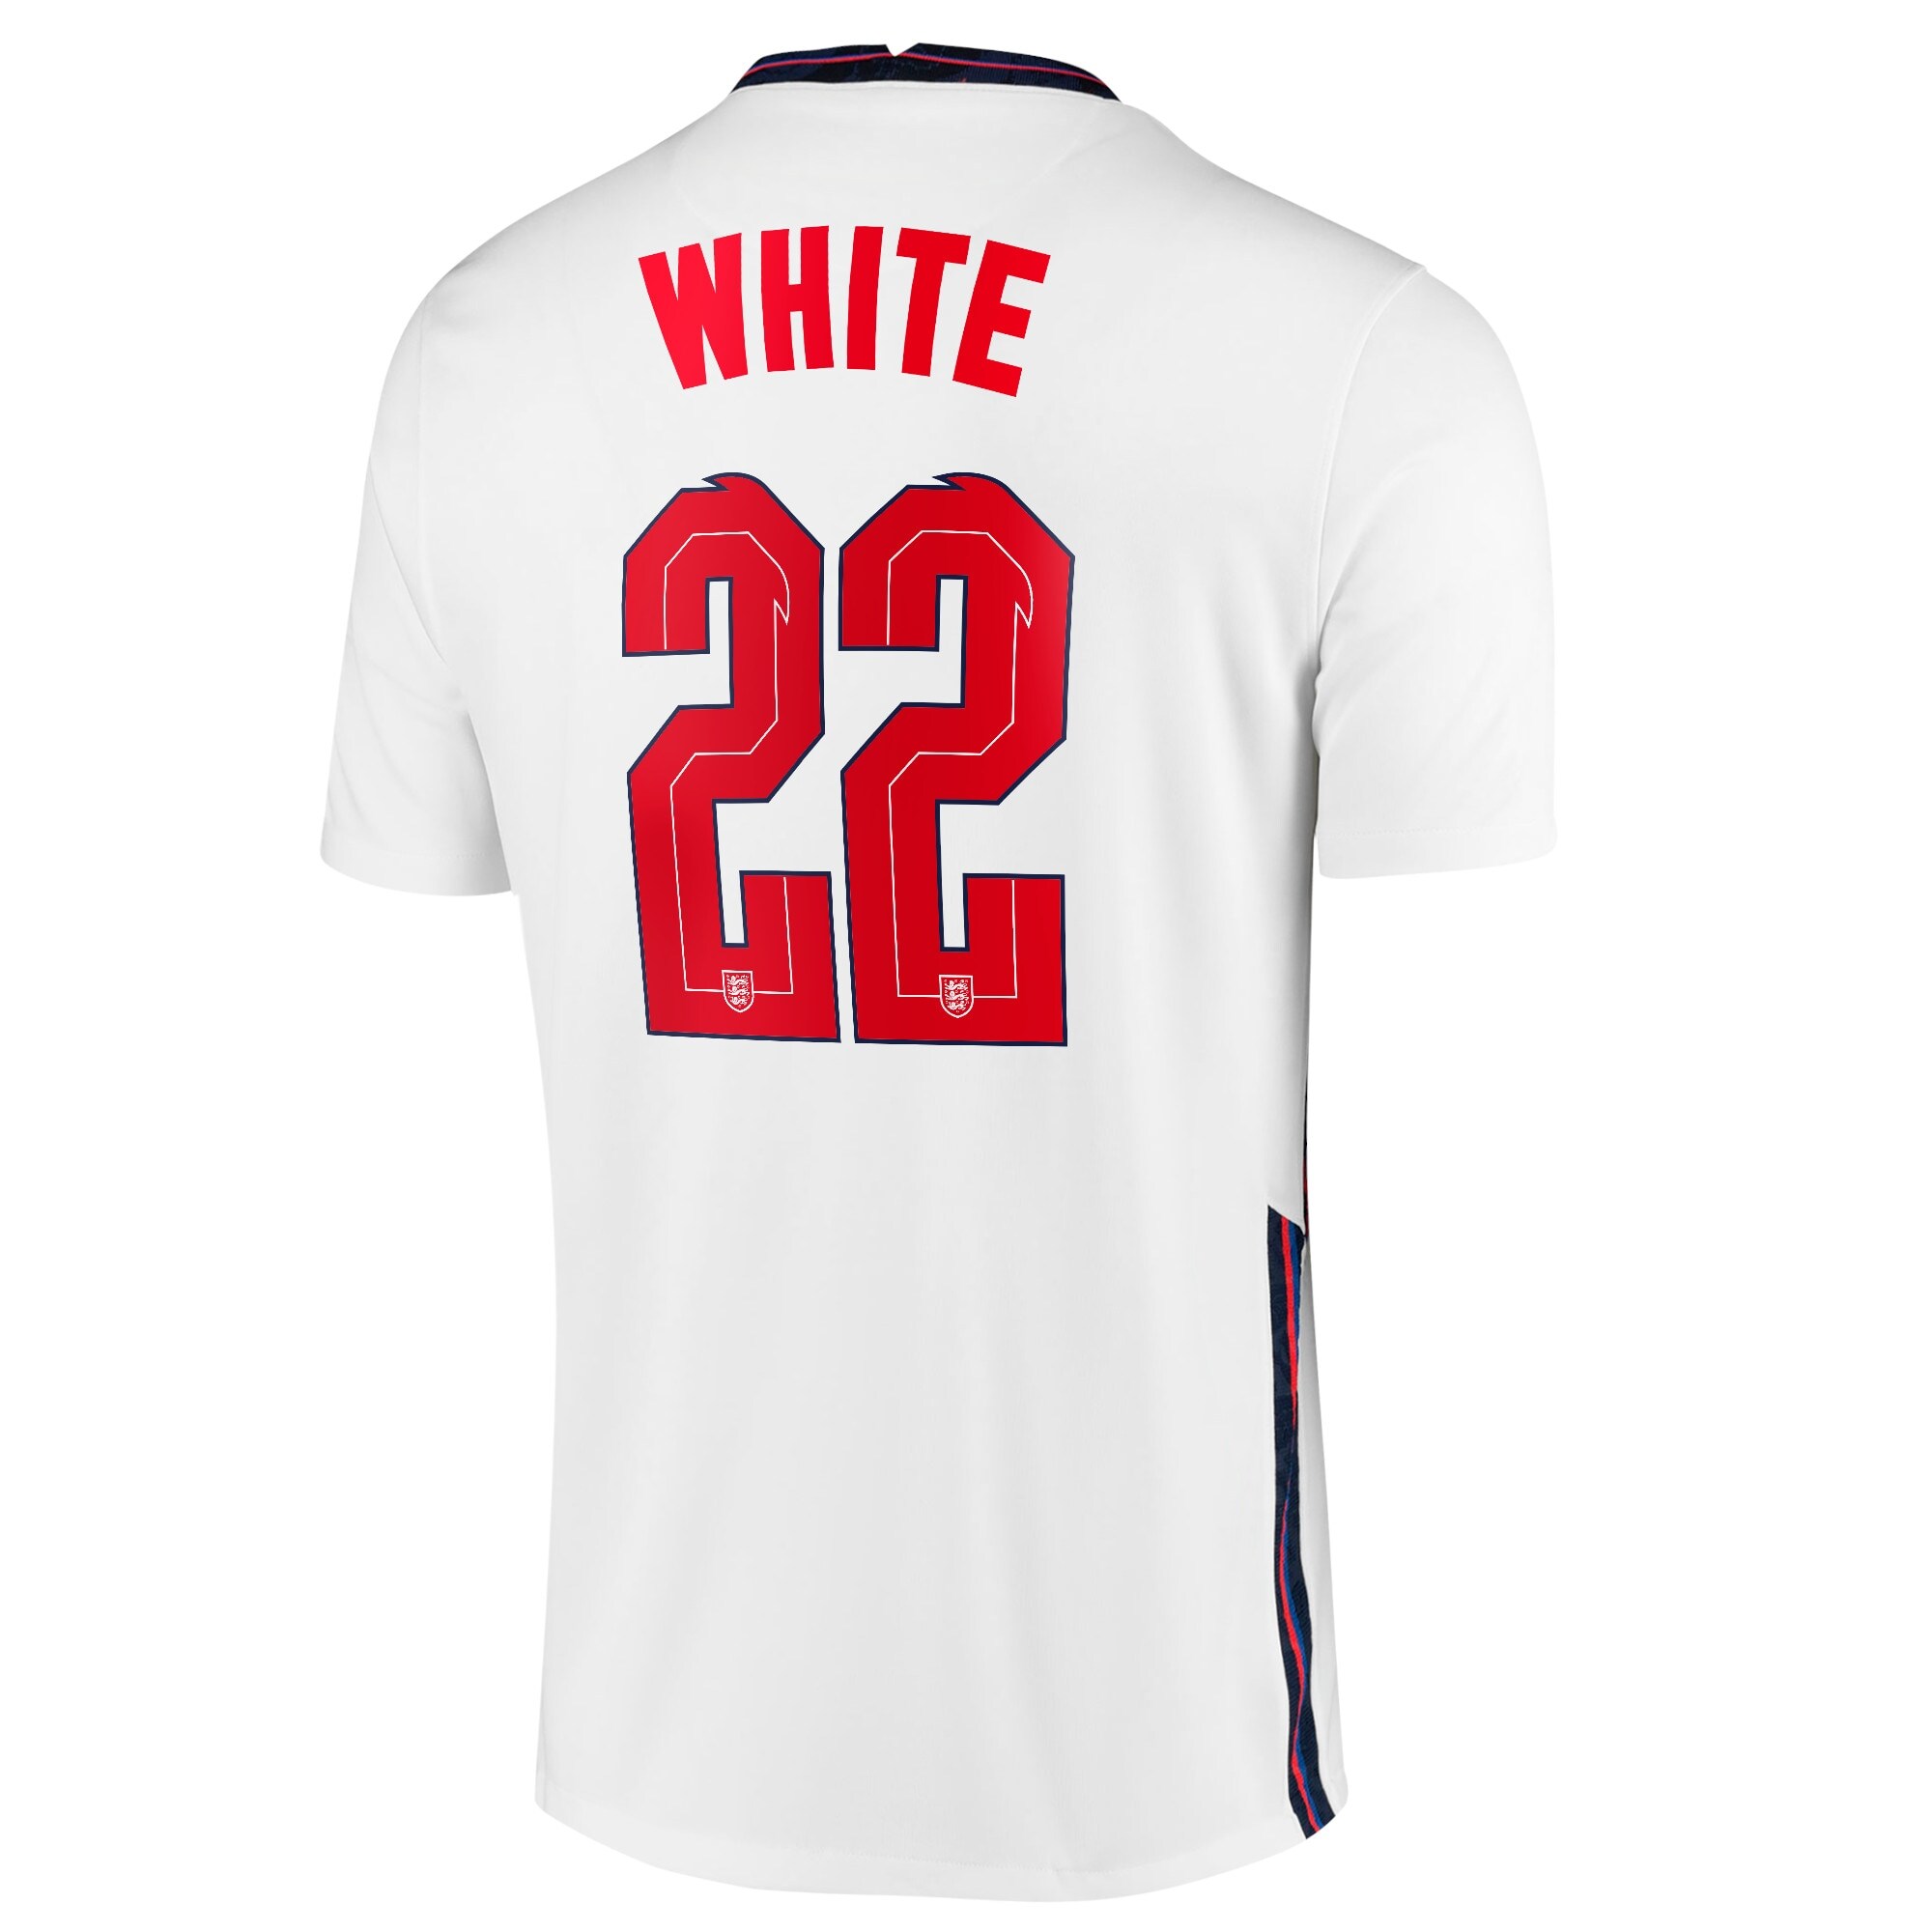 England Home Stadium Shirt 2020-22 with White 22 printing